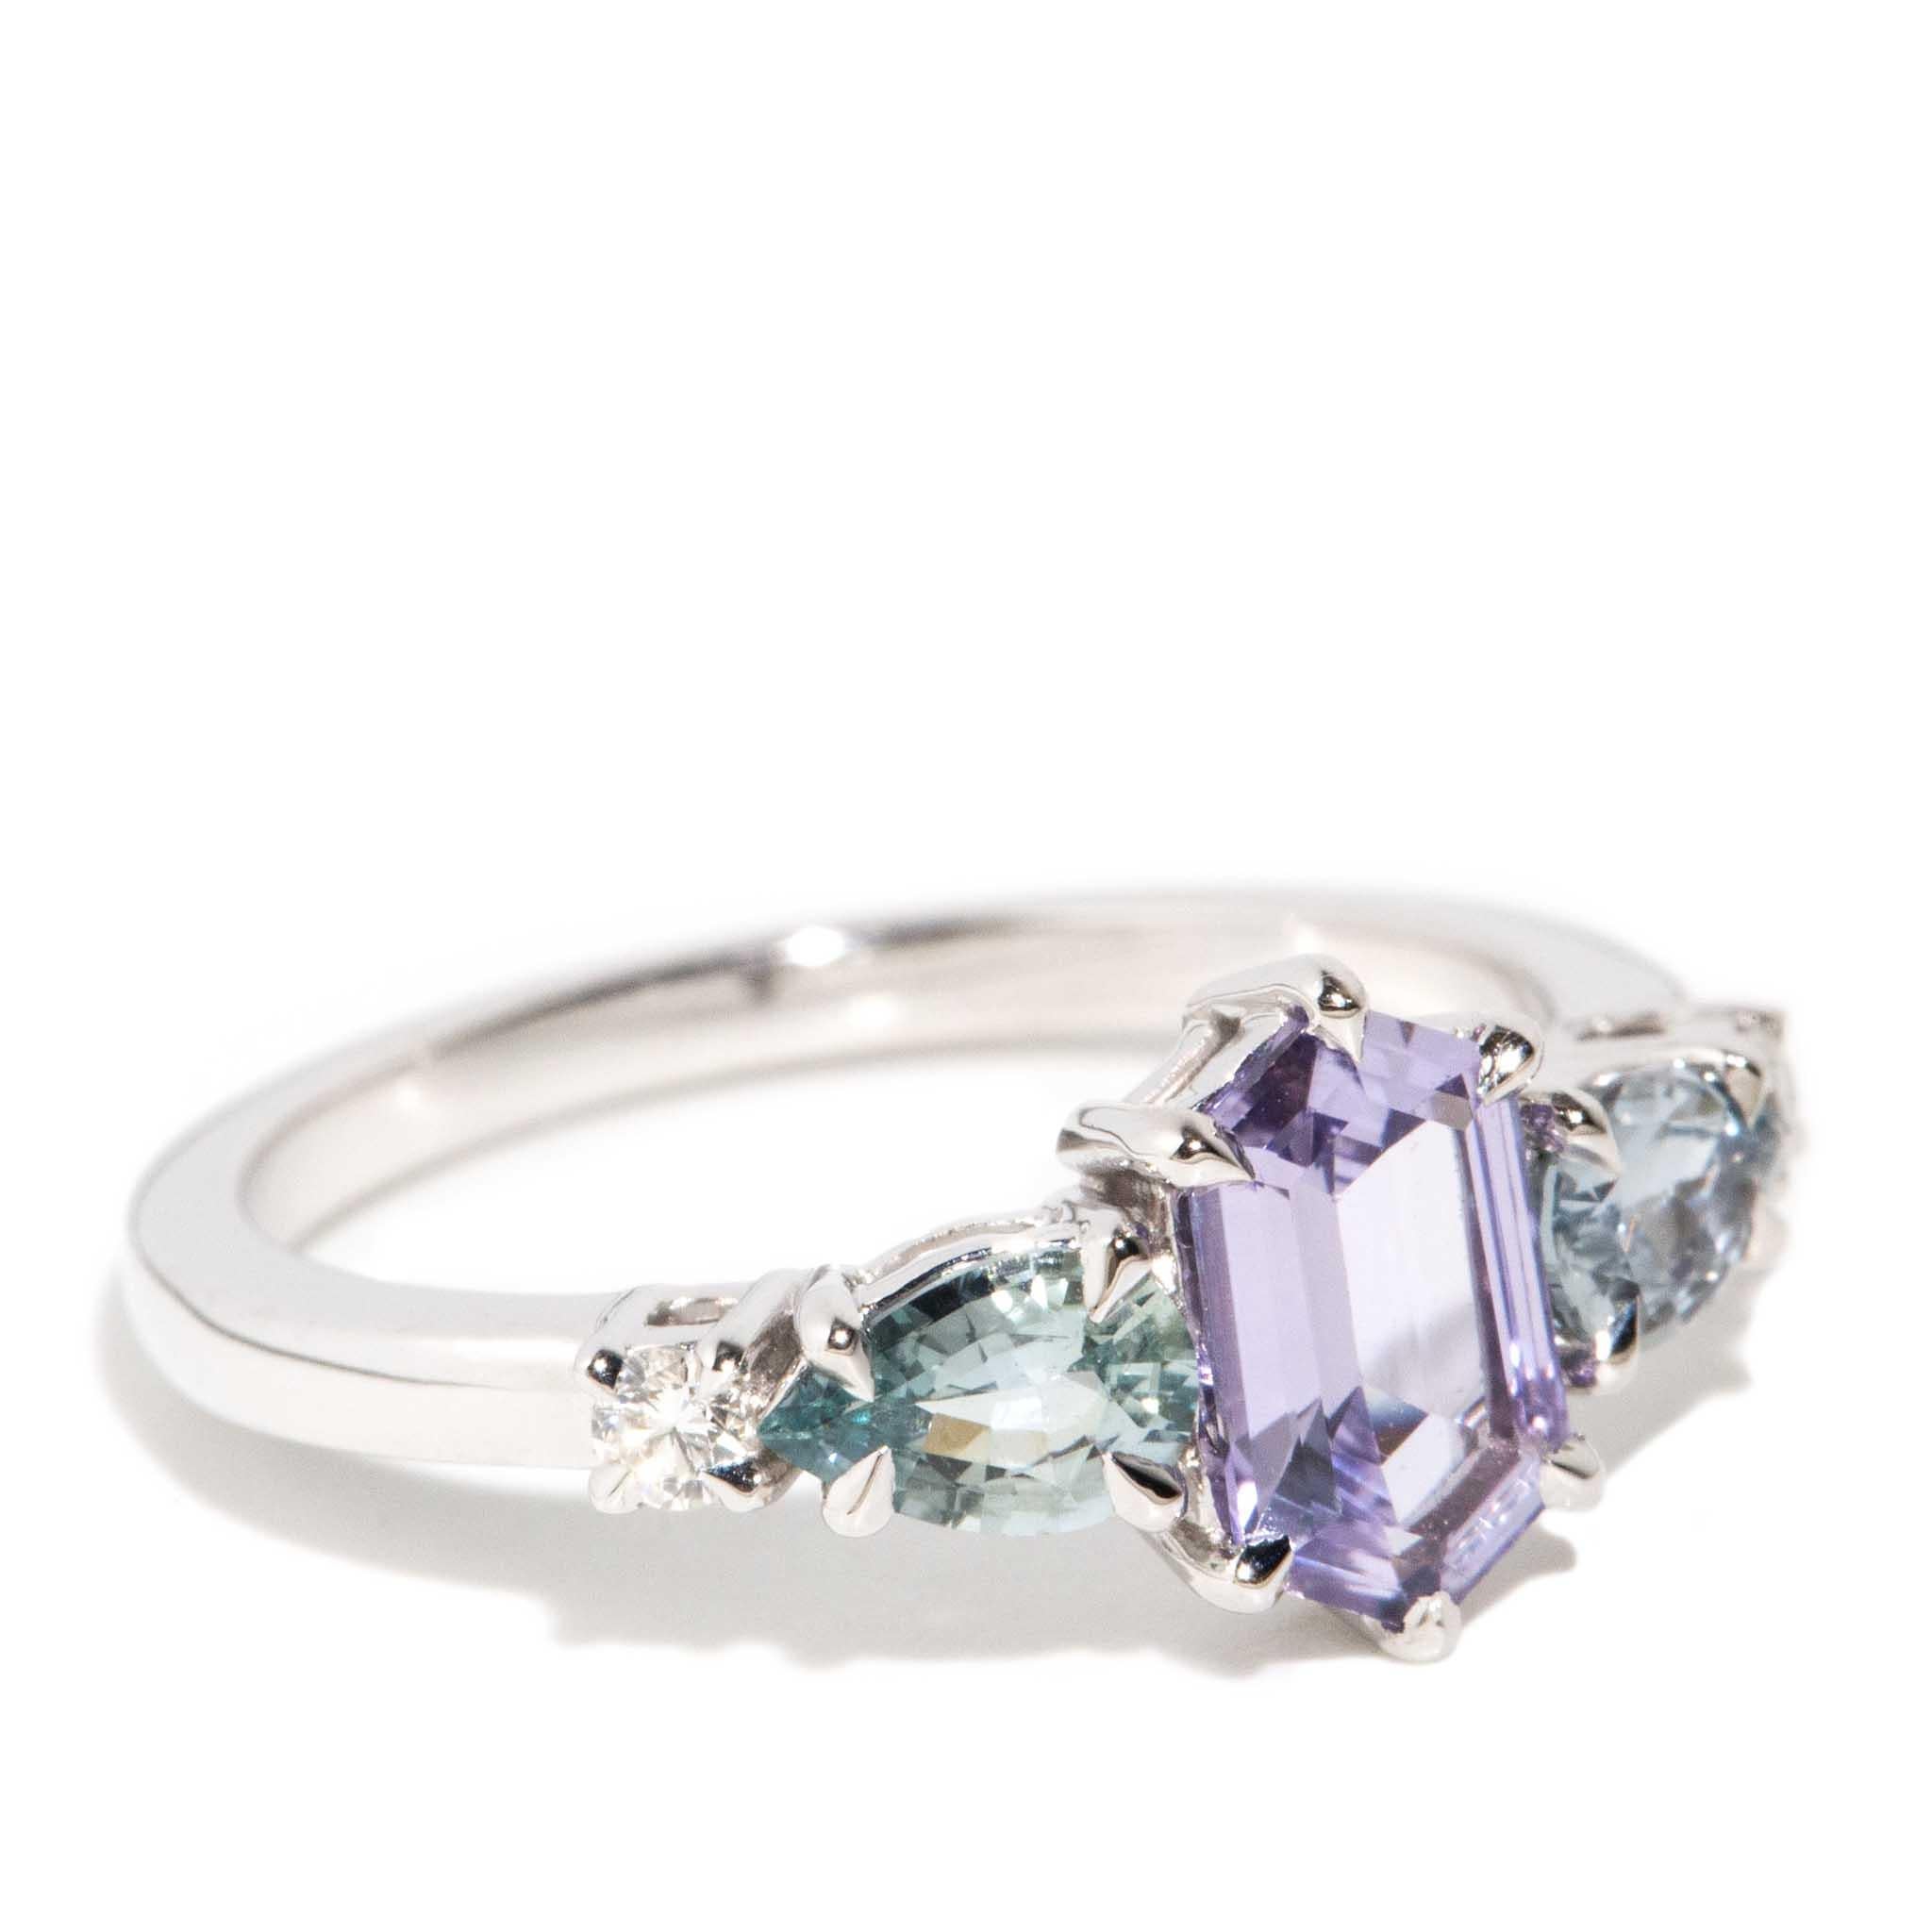 Modern Contemporary Hexagonal Sapphire & Diamond Ring 18 Carat White Gold